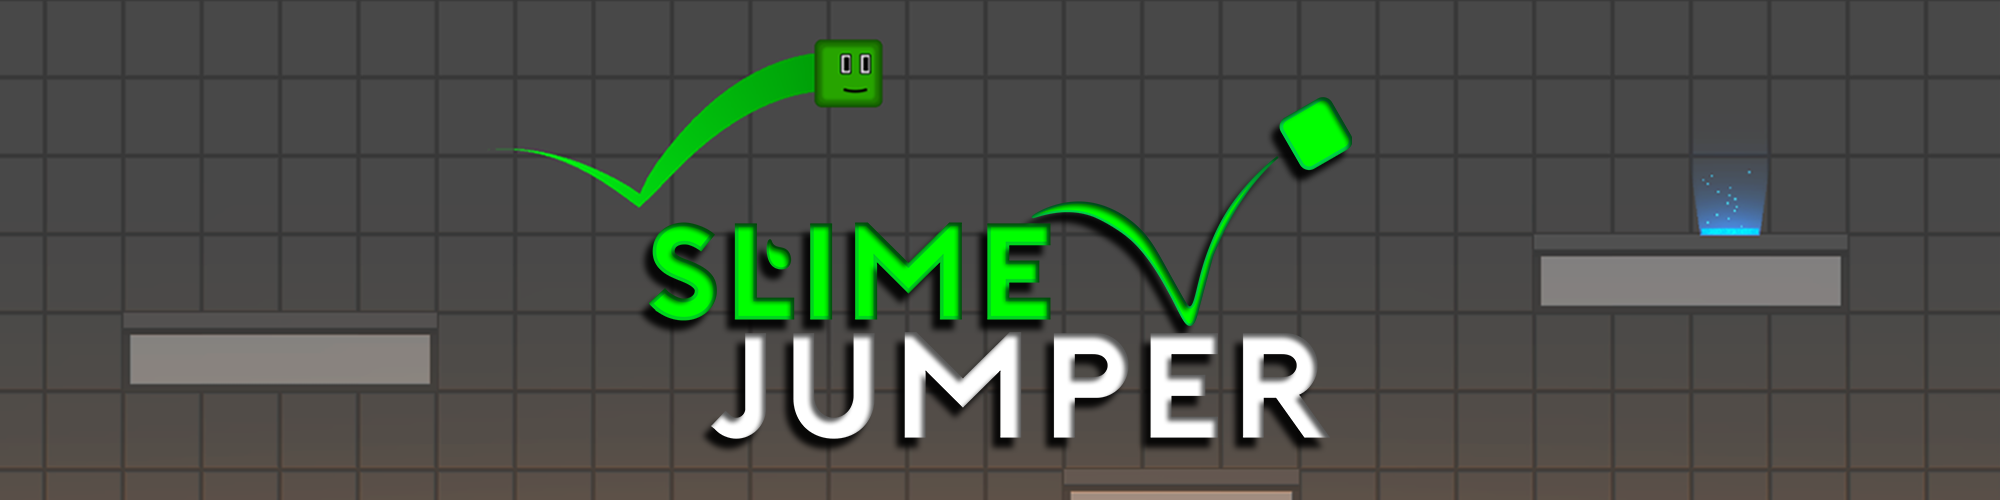 Slime Jumper